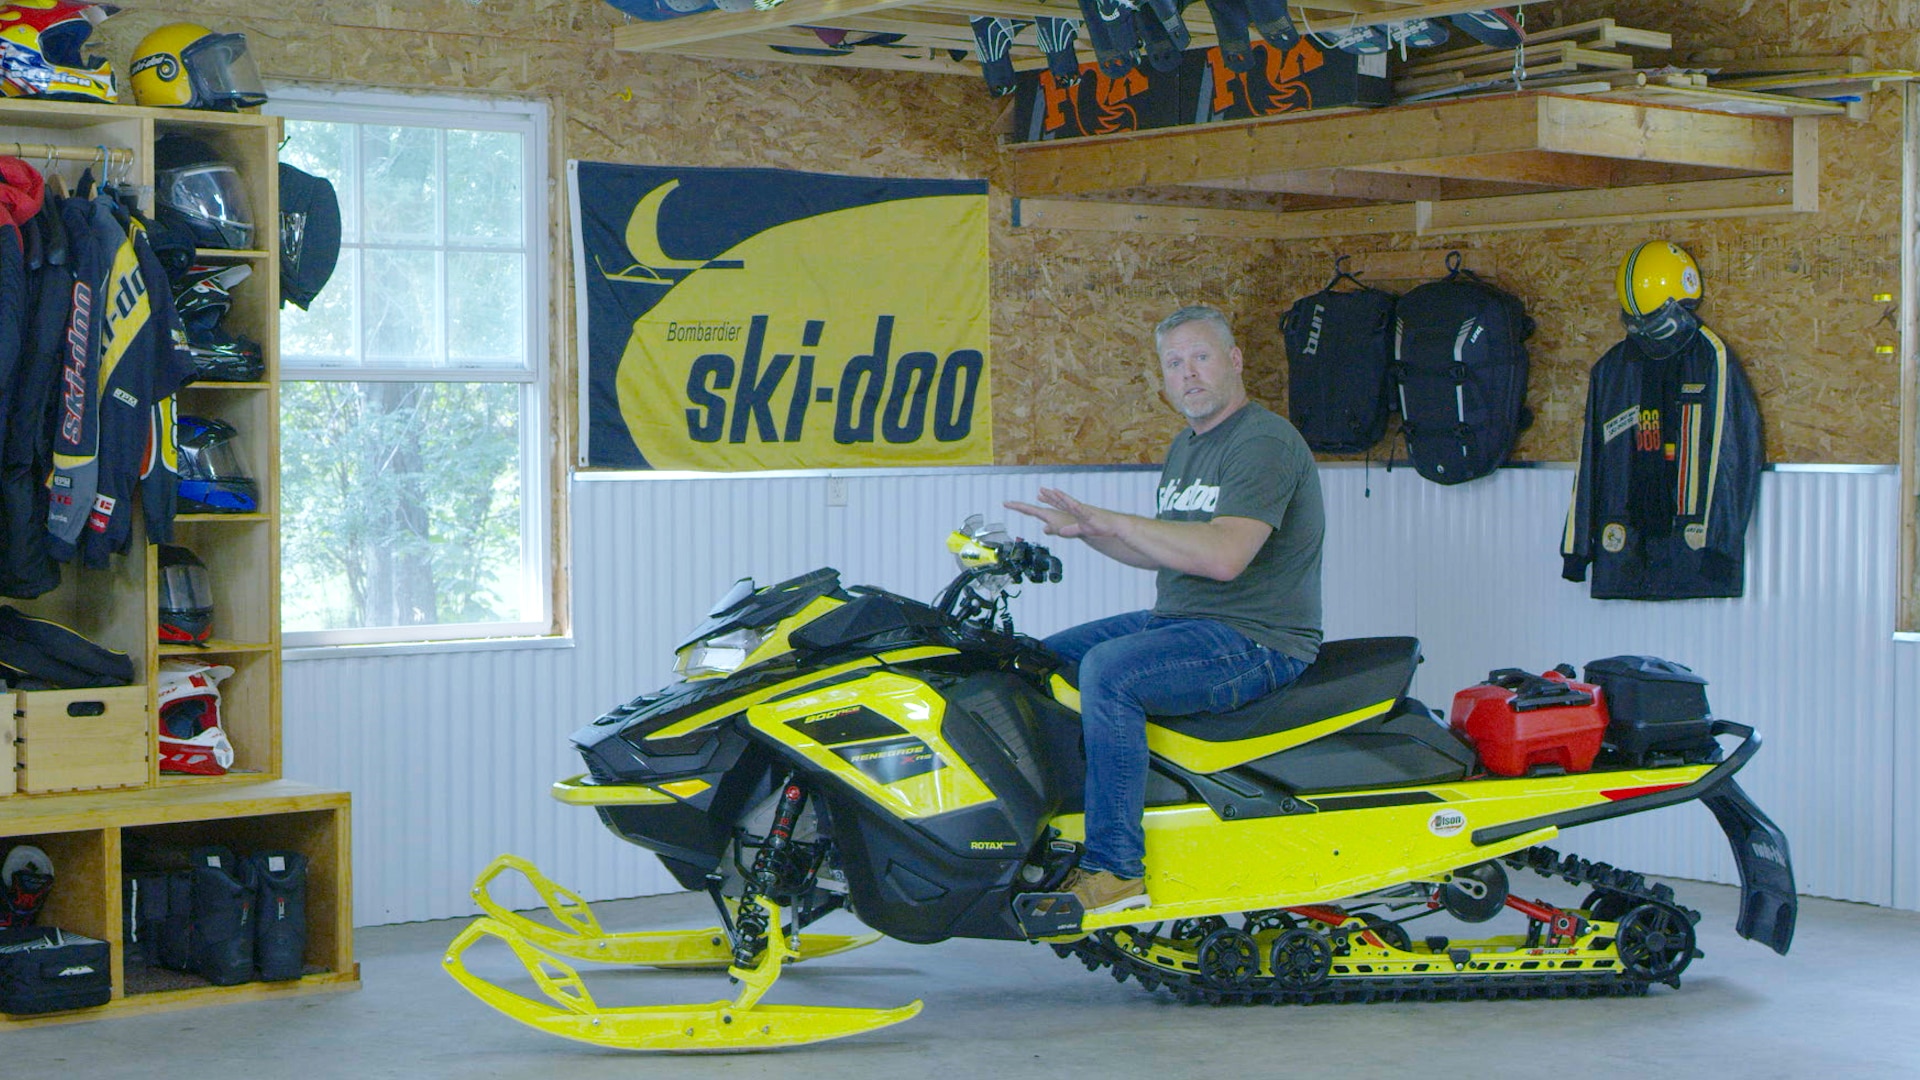 Ski-doo ambassador Troy Oleson sitting on his sled